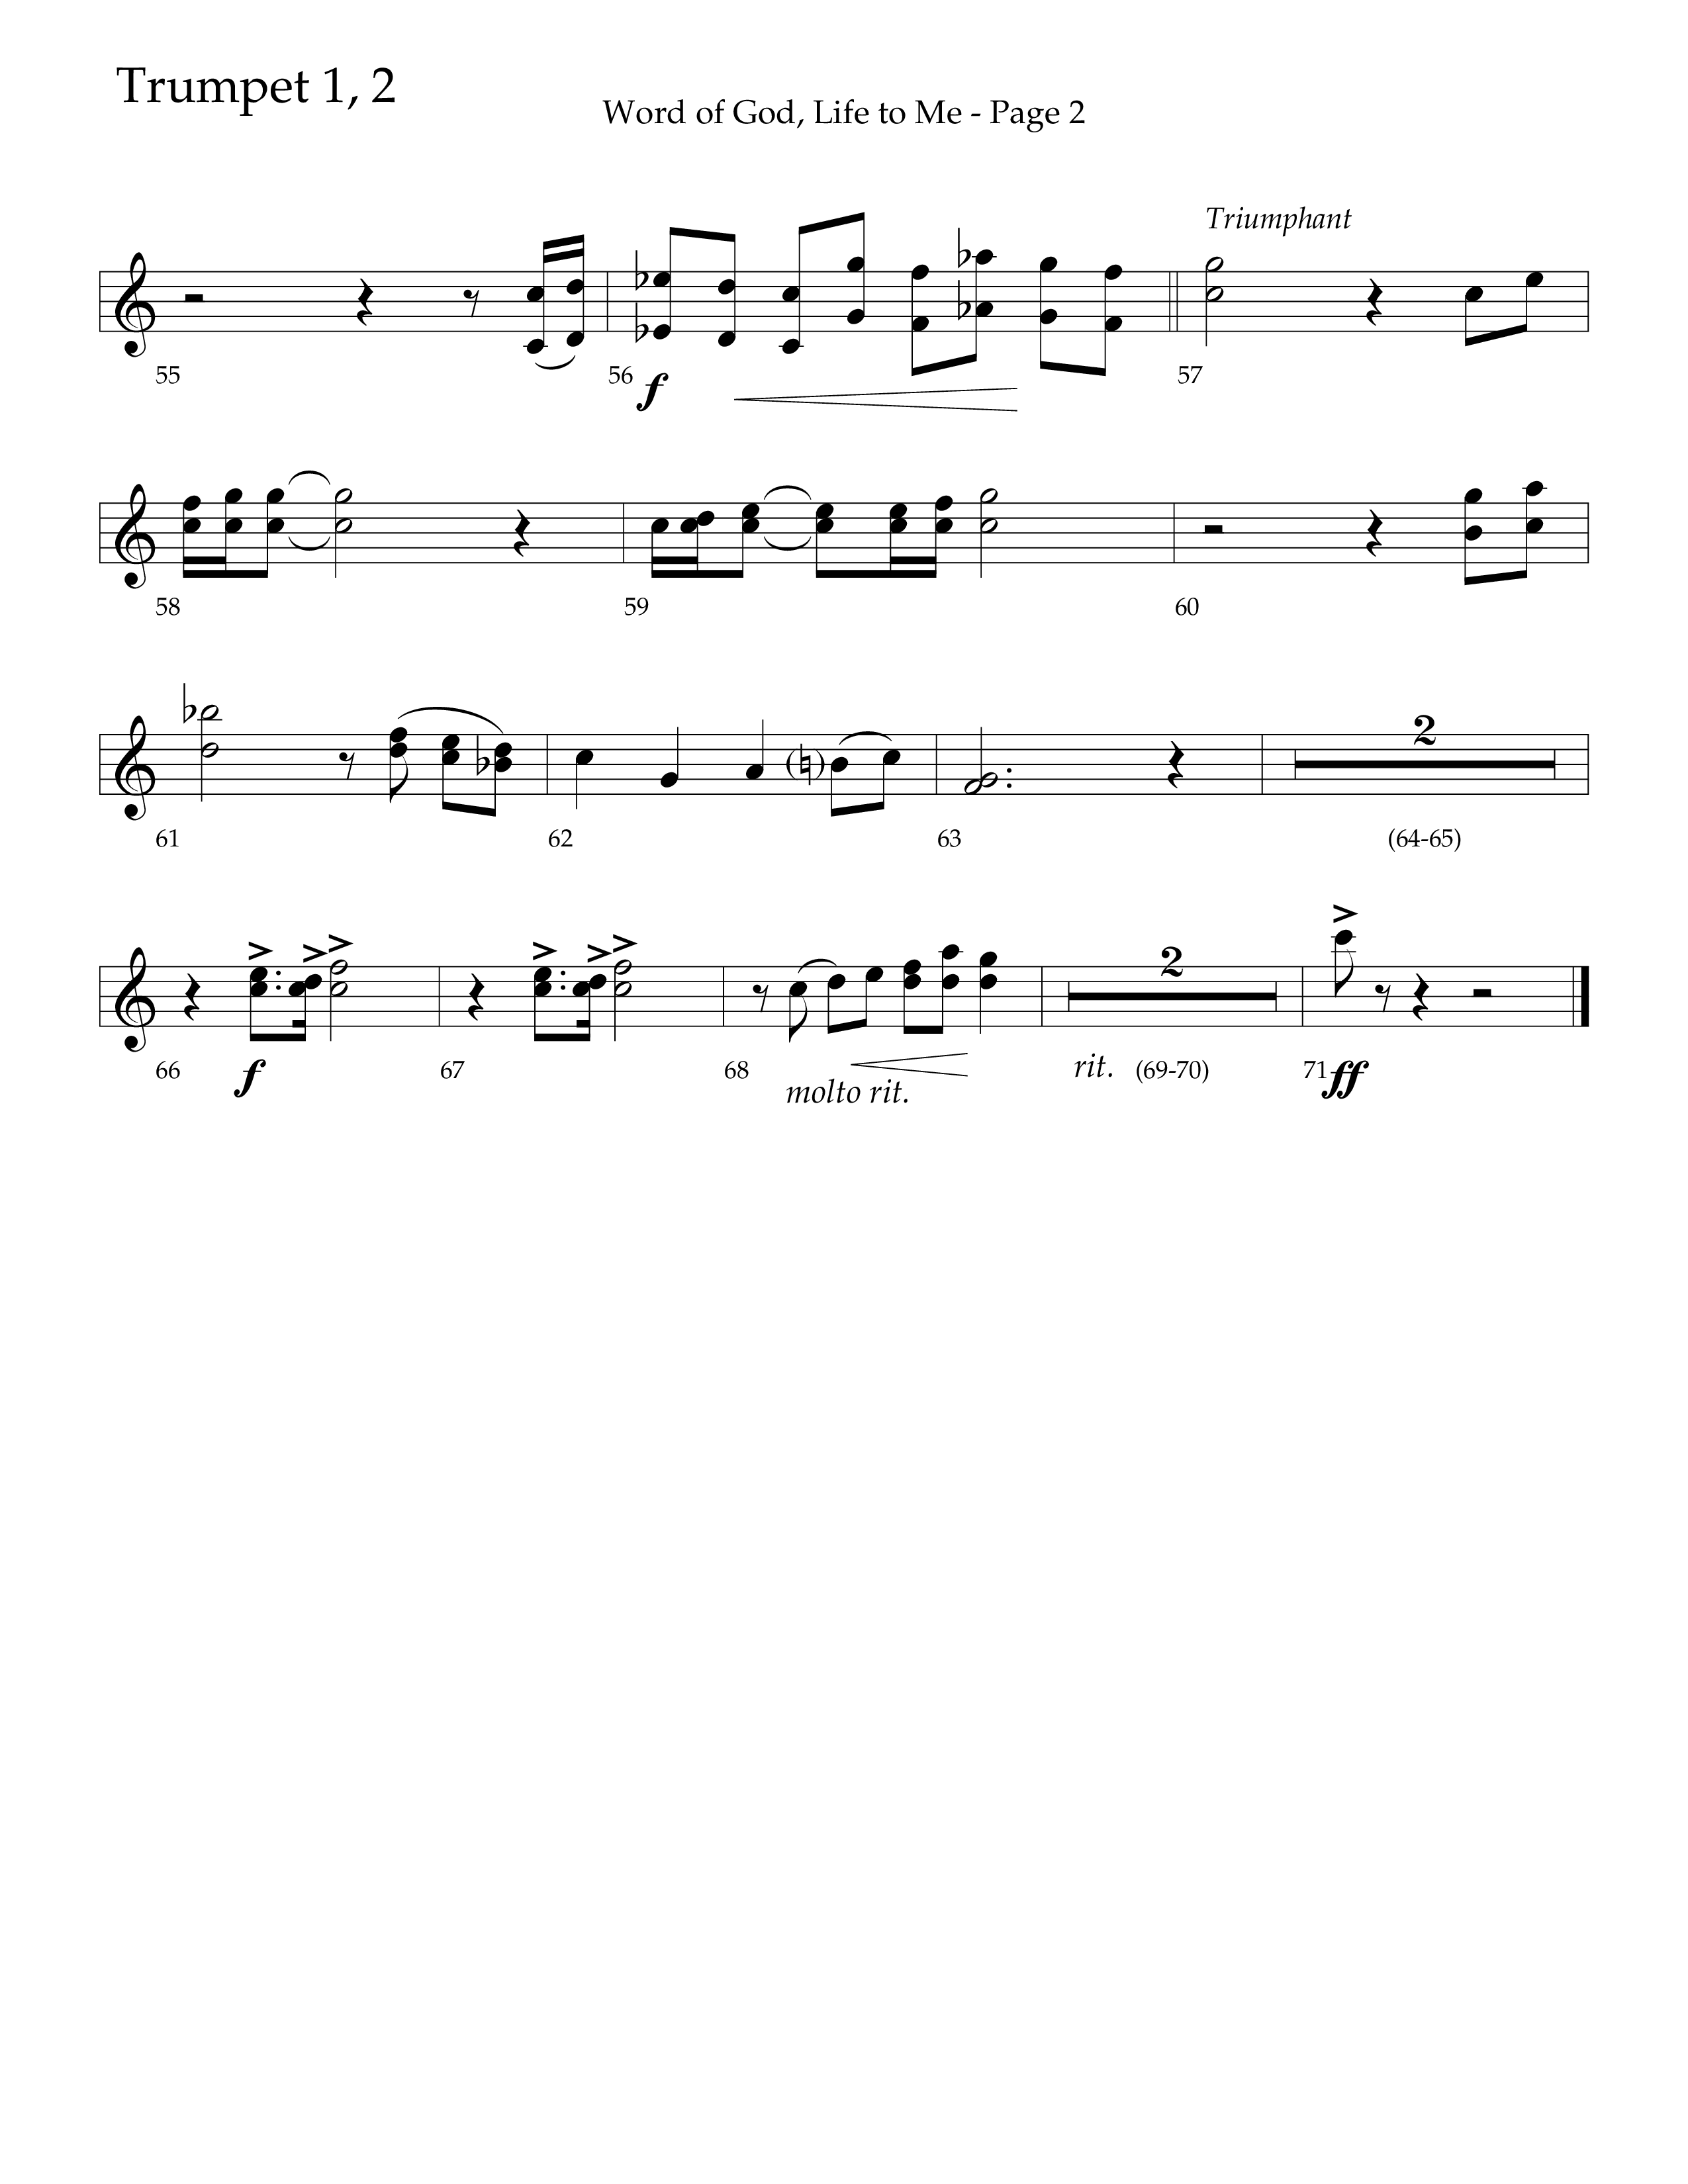 Word Of God Life To Me (Choral Anthem SATB) Trumpet 1,2 (Lifeway Choral / Arr. David Hamilton)